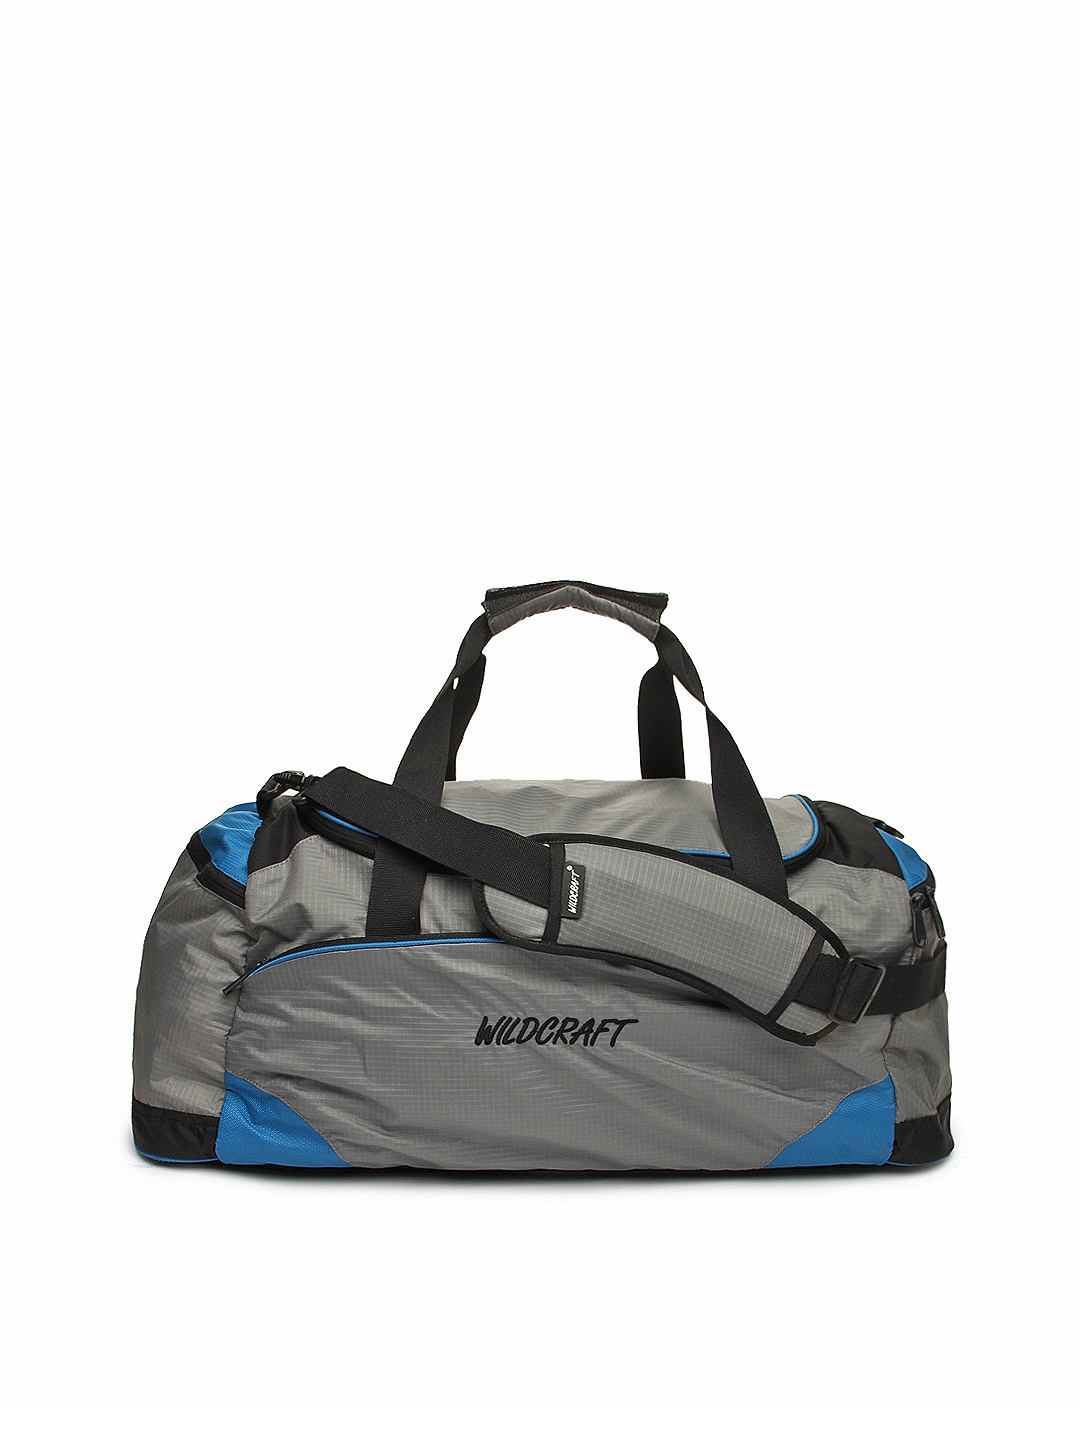 Wildcraft Unisex Grey & Blue Duffle Bag